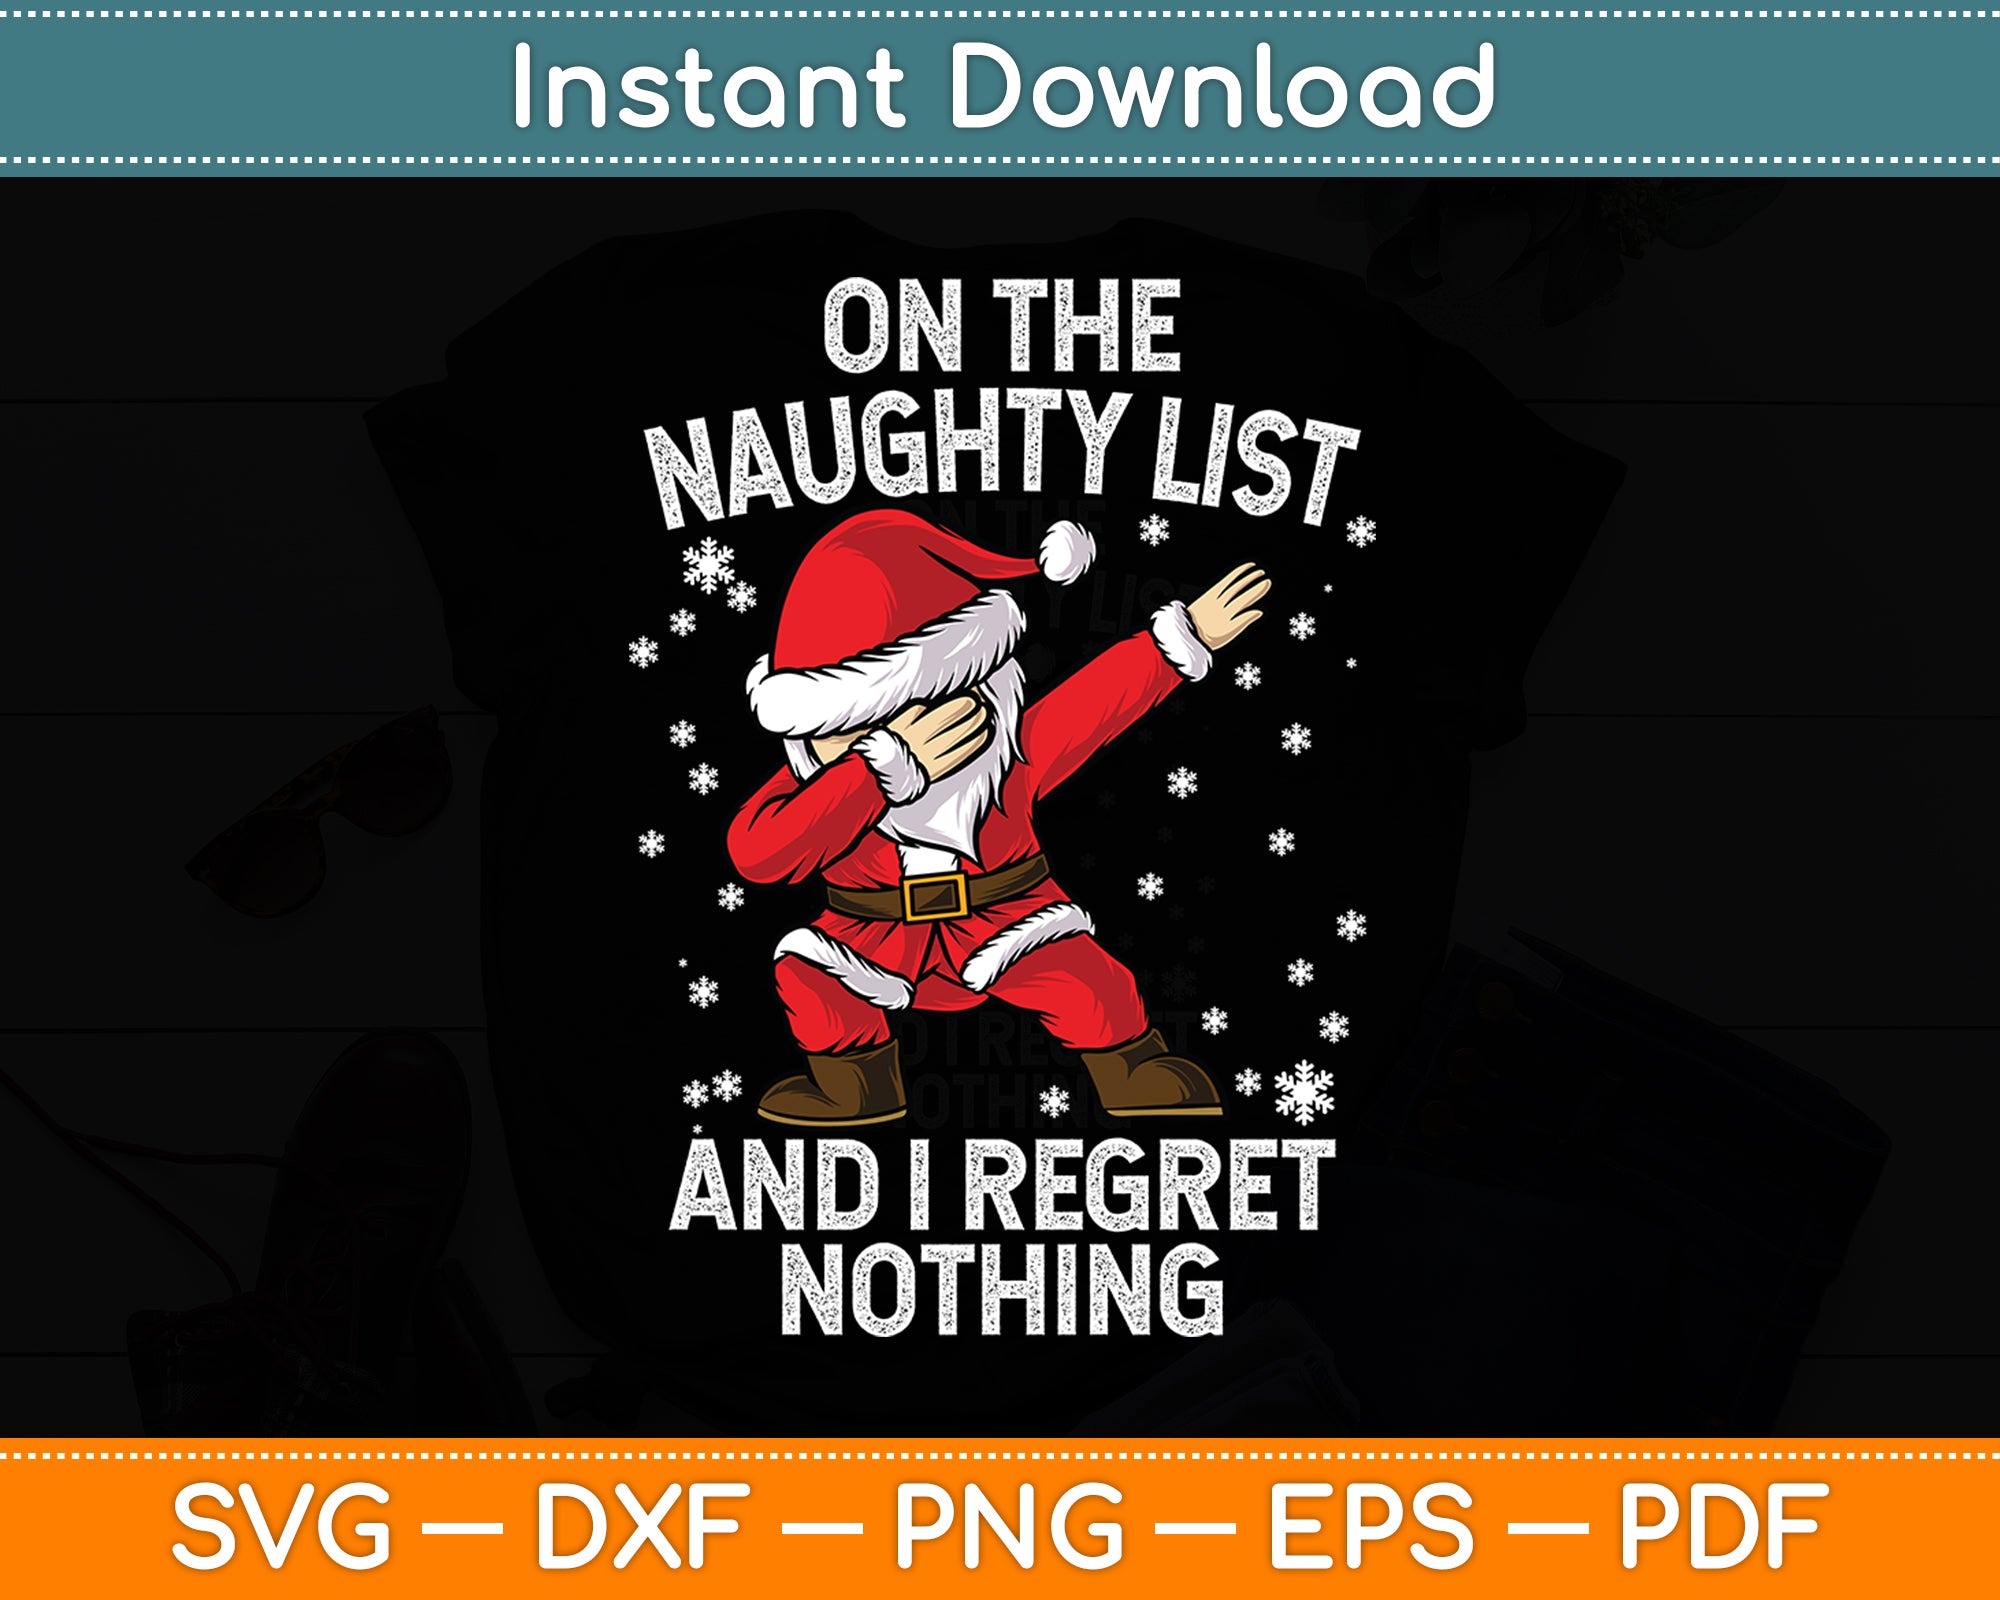 Naughty List Warning | Digital Download